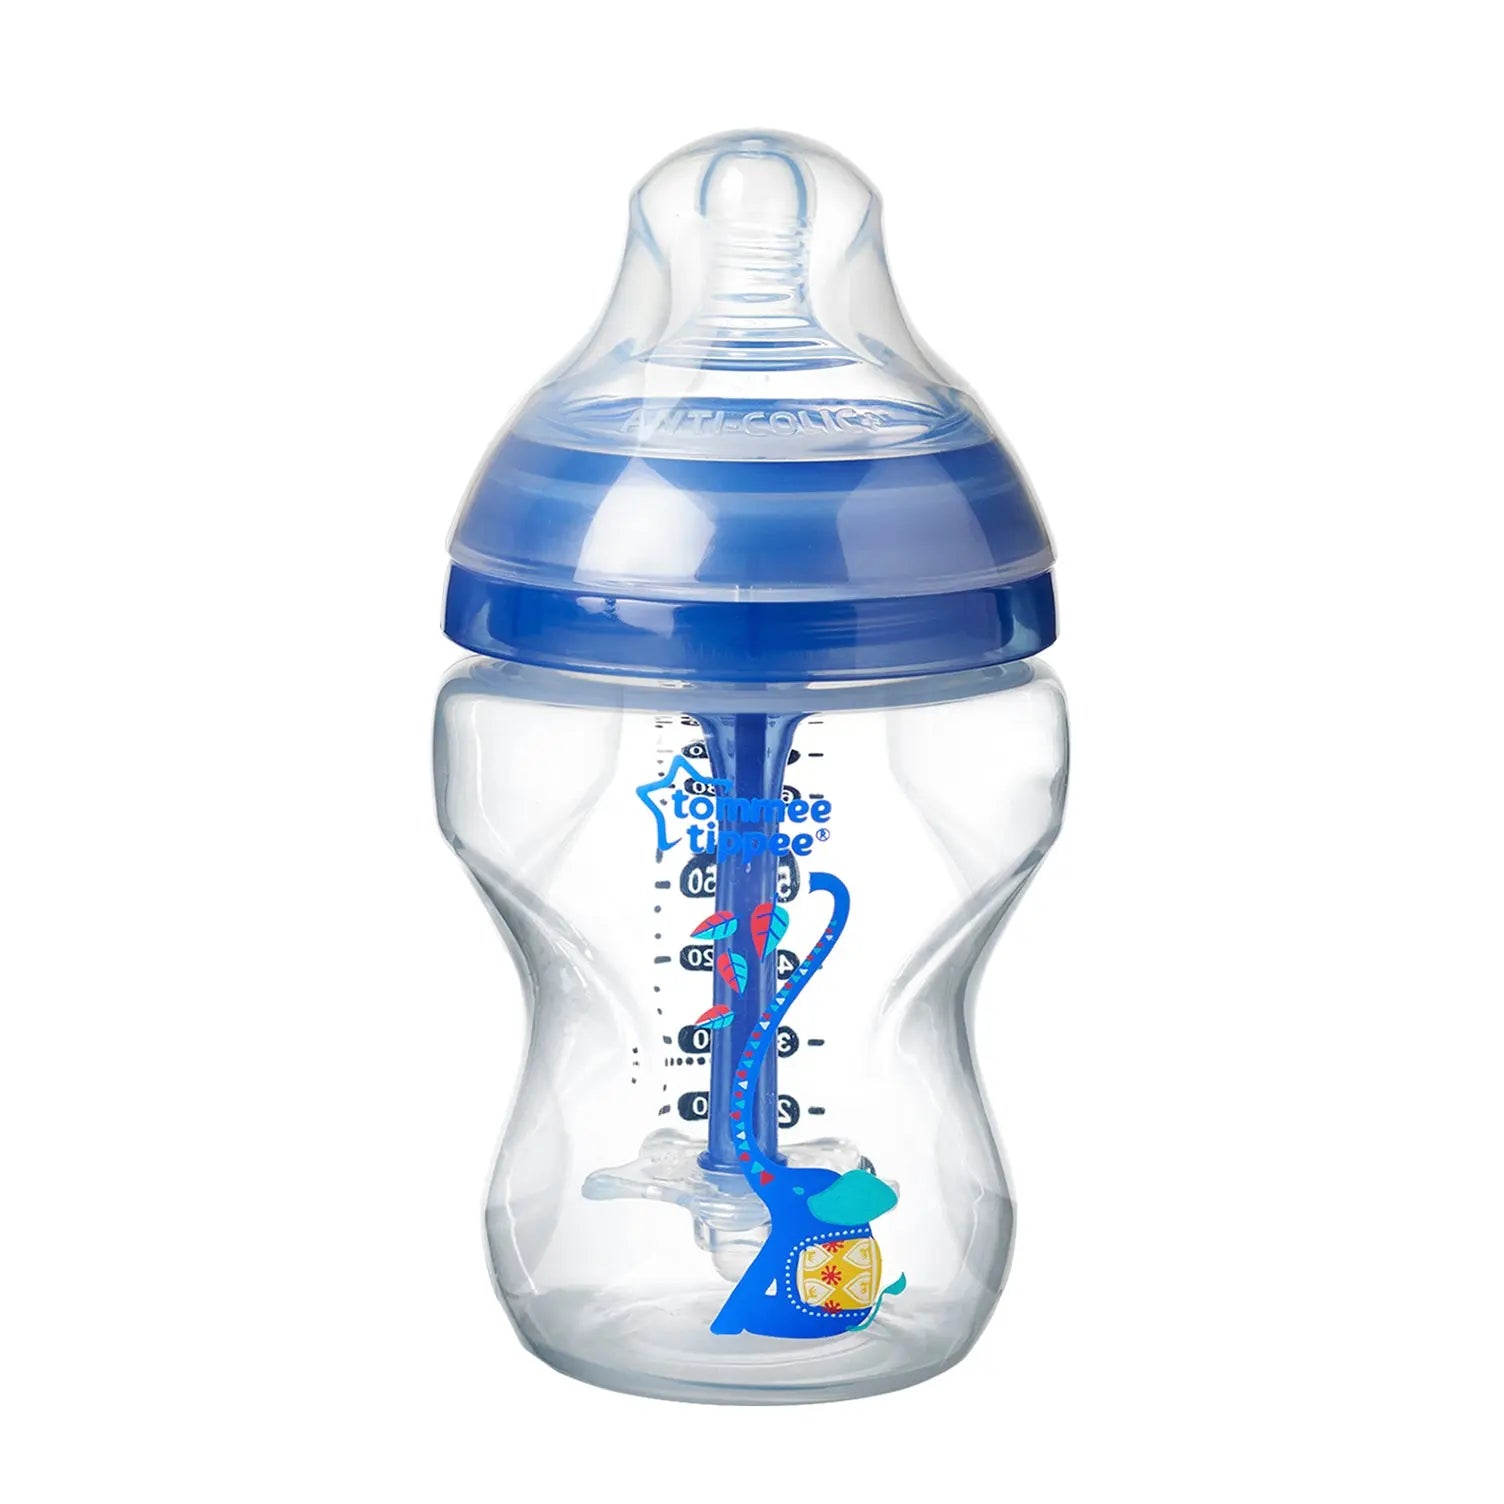 <tc>مجموعة زجاجات تومي تيبي المتقدمة المضادة للمغص - للأولاد</tc>